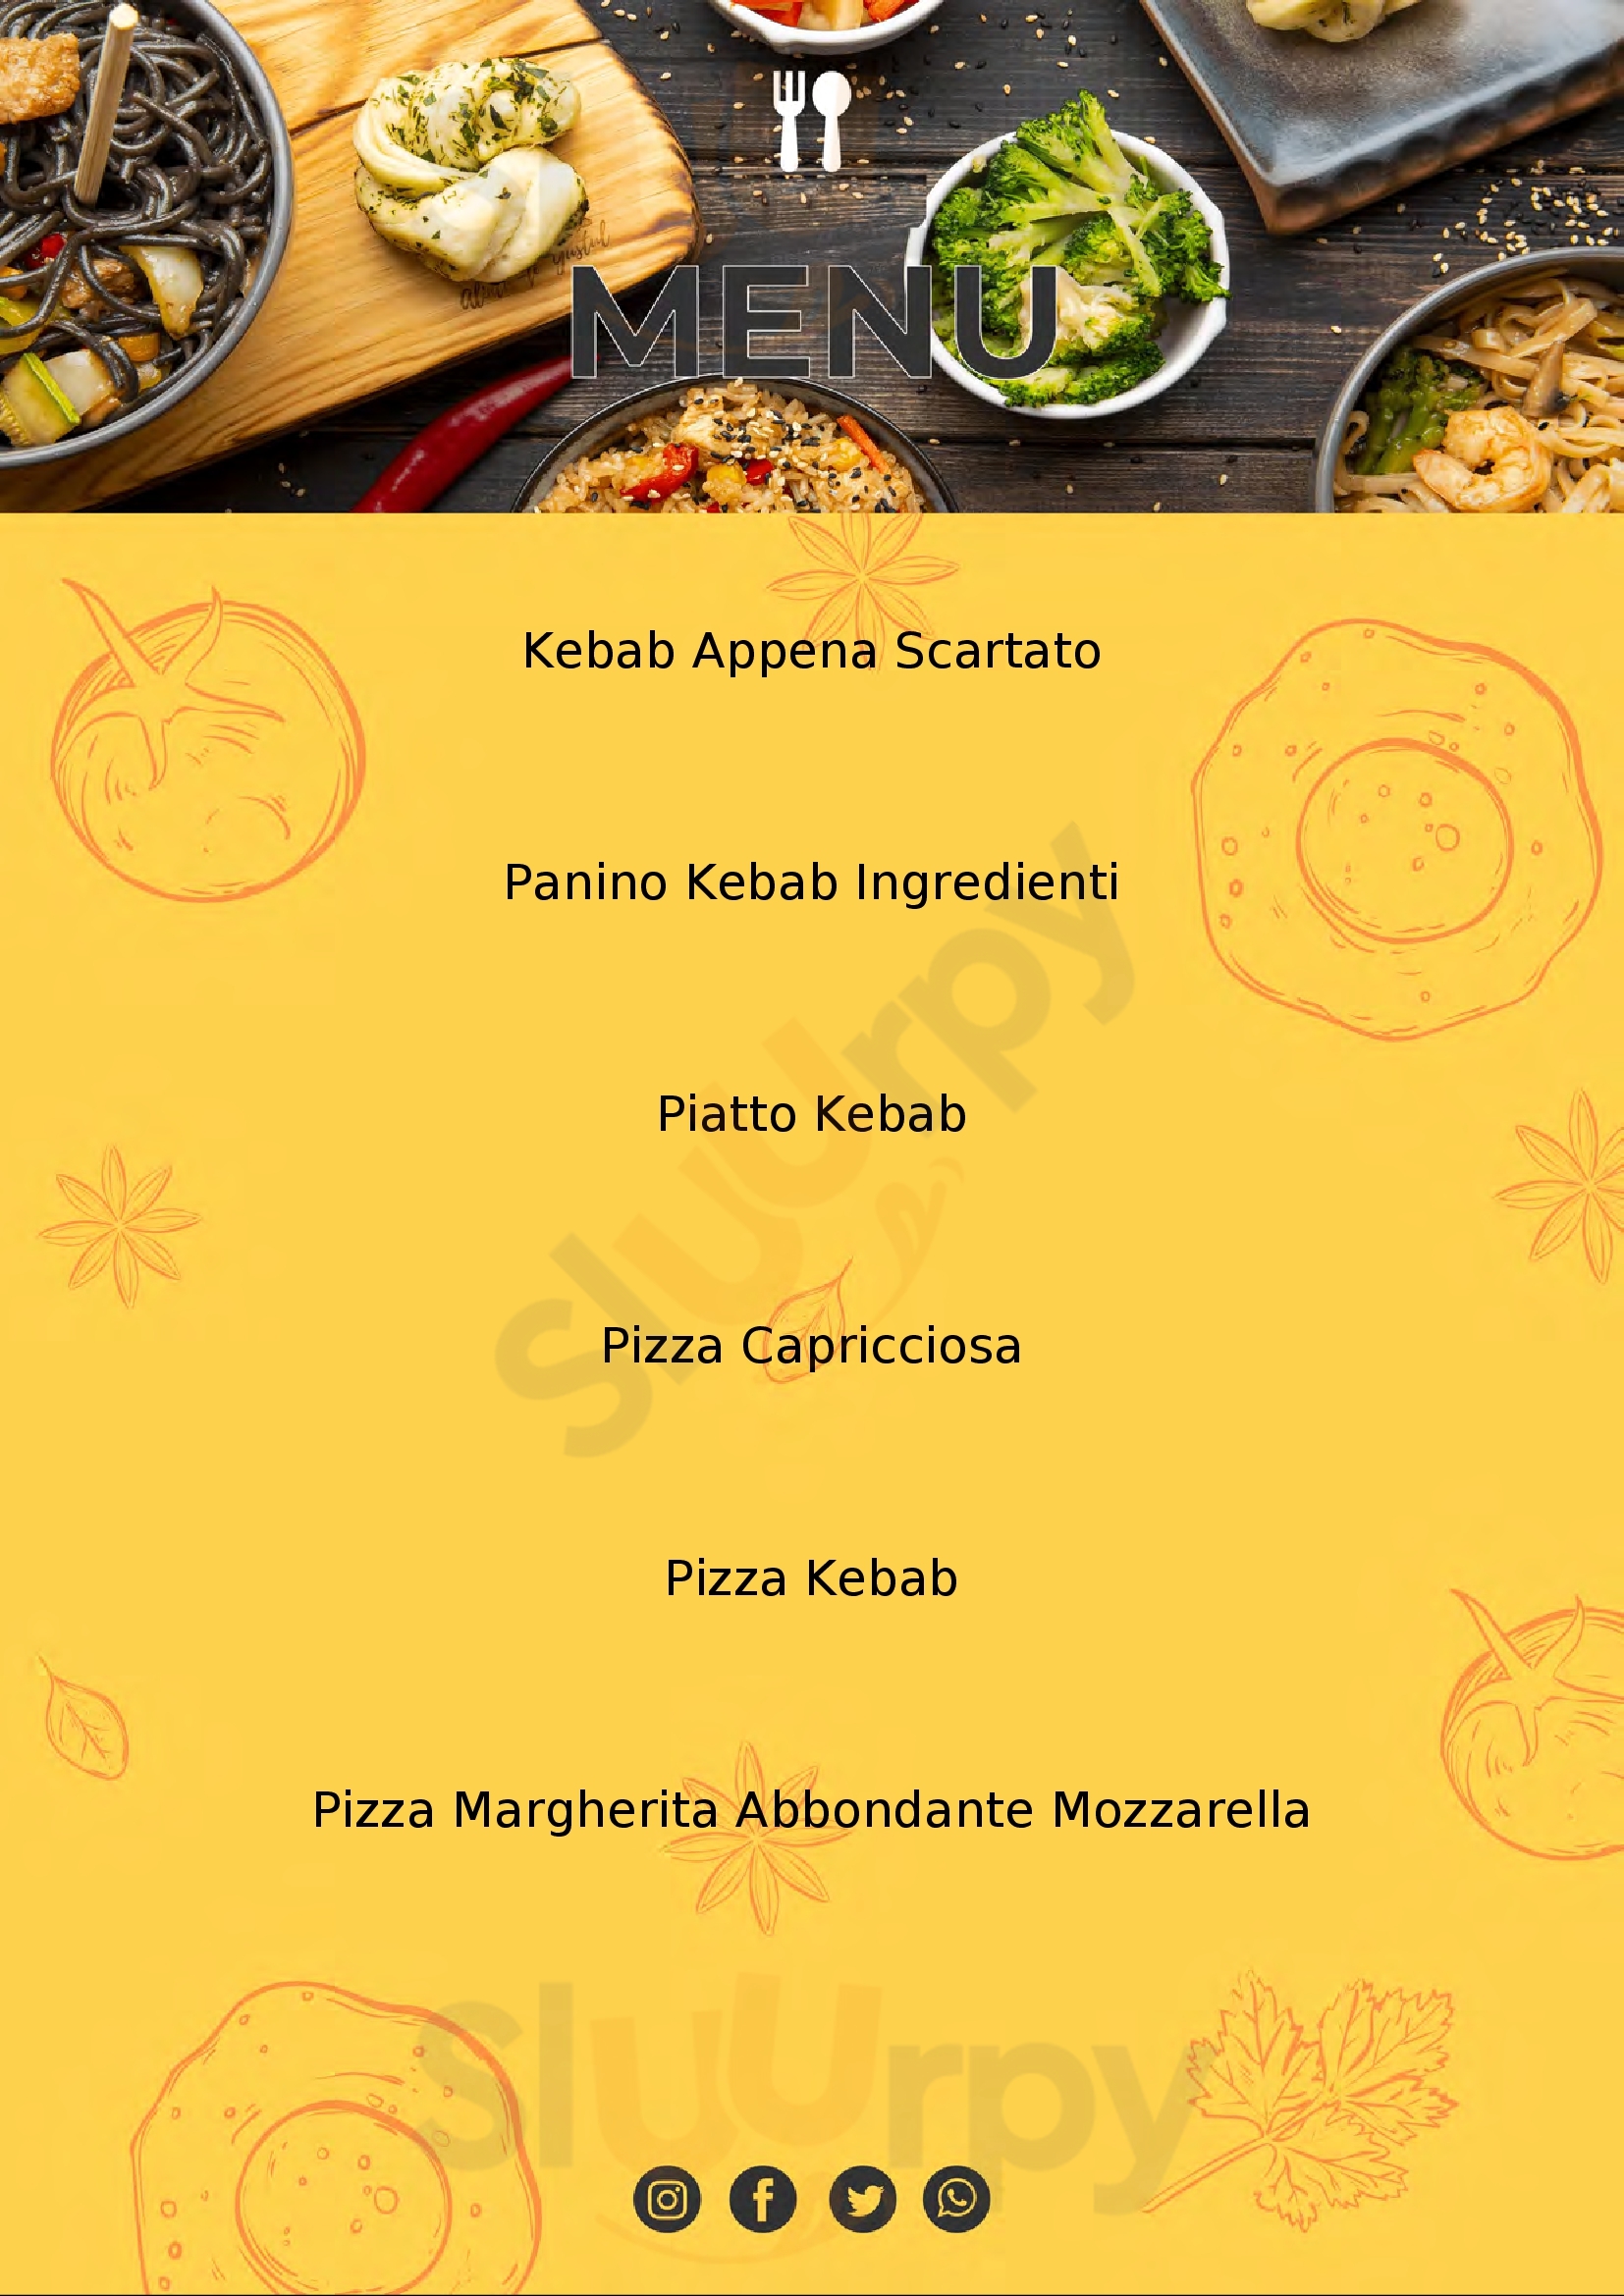 Pizzeria Pizze & Delizie Tavagnacco menù 1 pagina